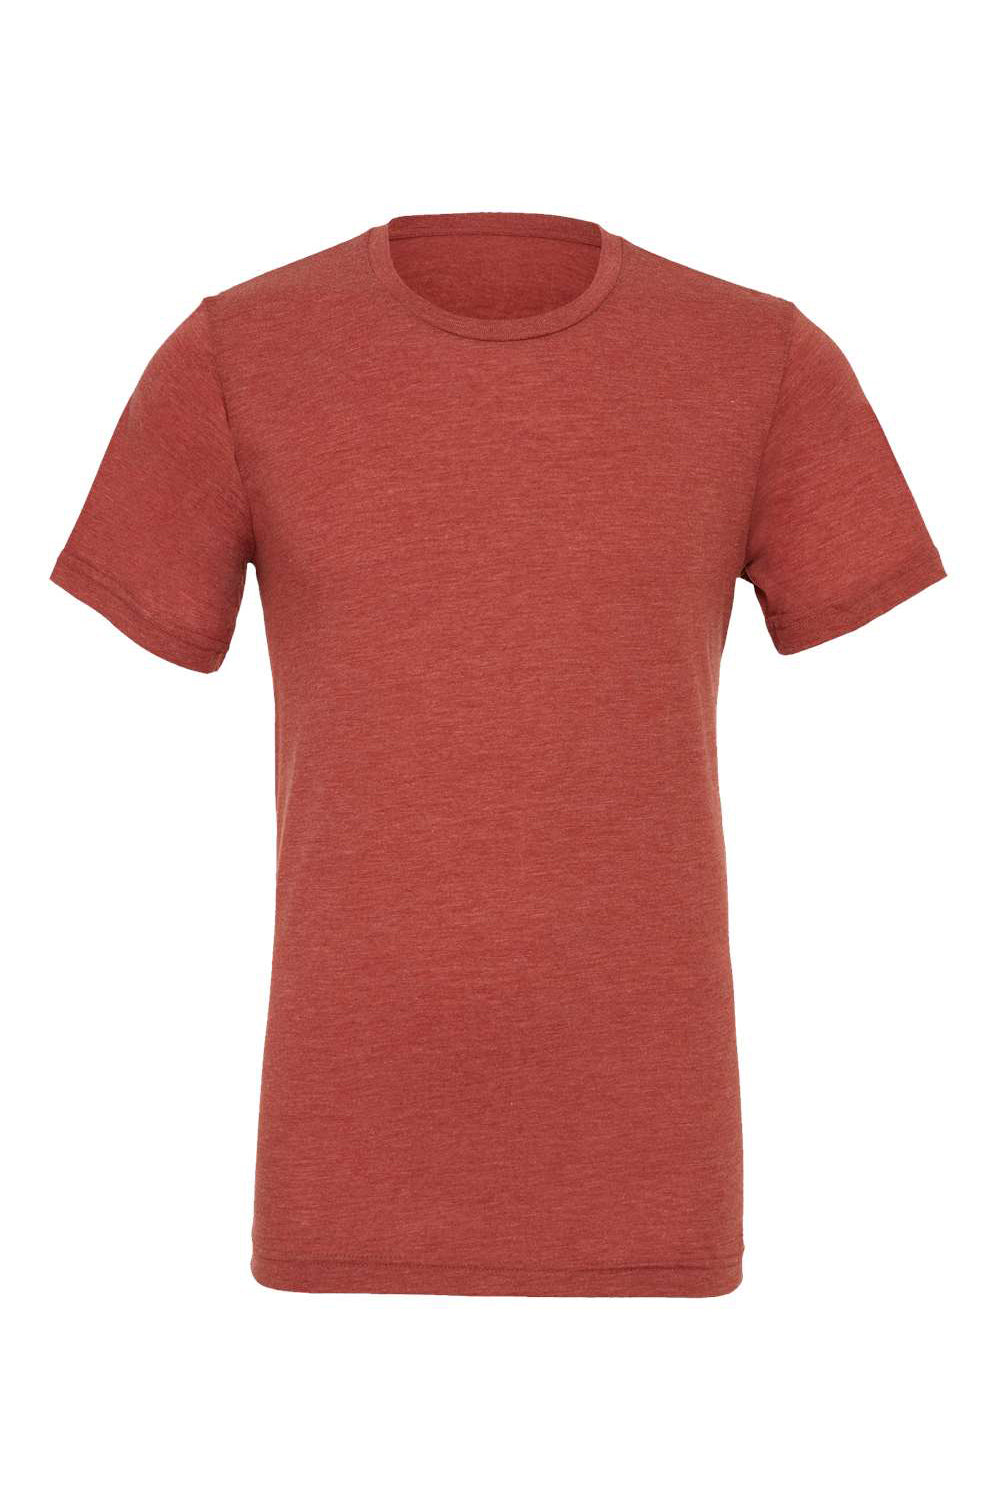 Bella + Canvas BC3413/3413C/3413 Mens Short Sleeve Crewneck T-Shirt Clay Red Flat Front